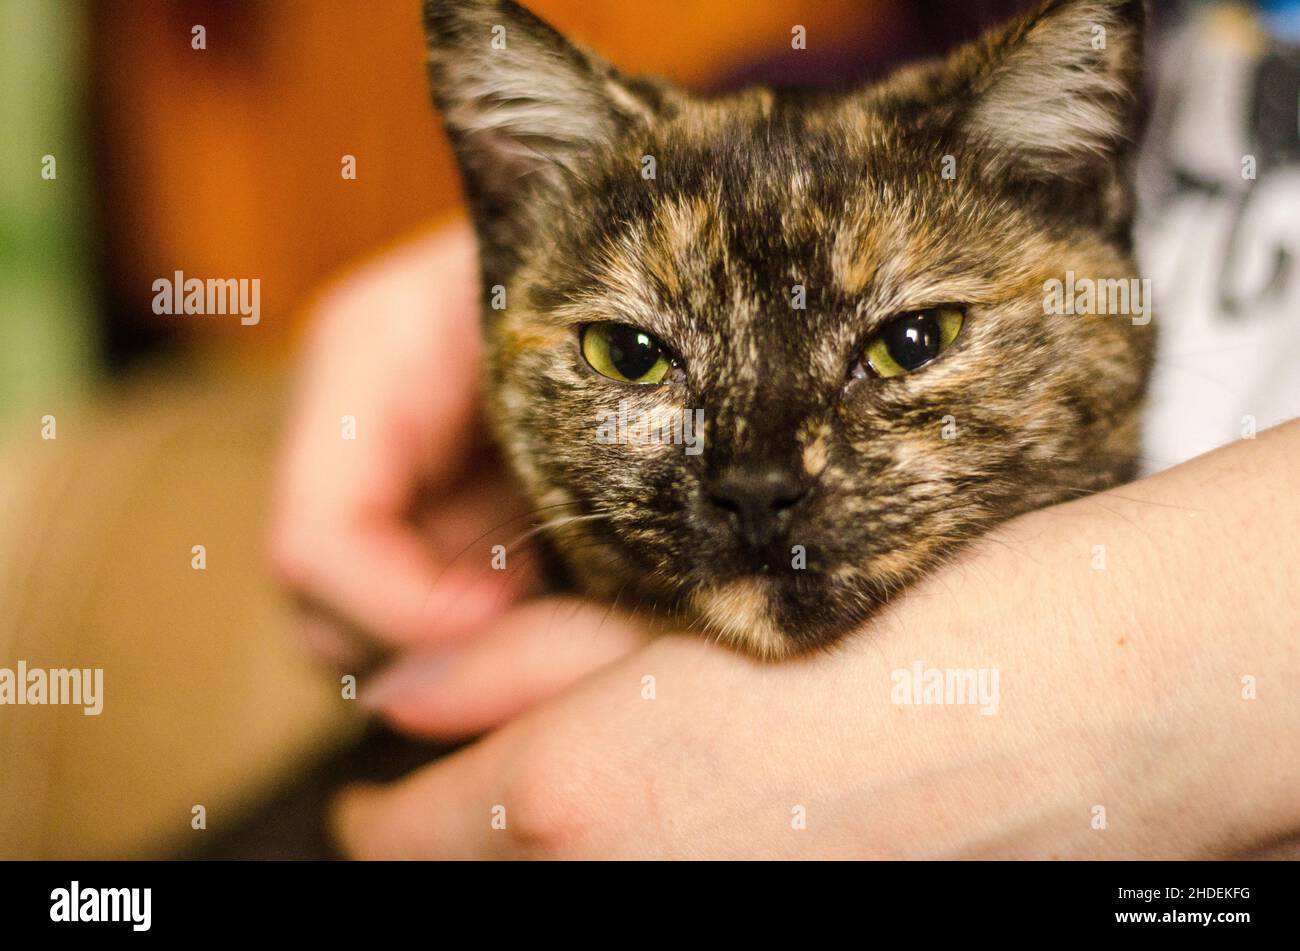 Cat thai animal portrait Stock Photo